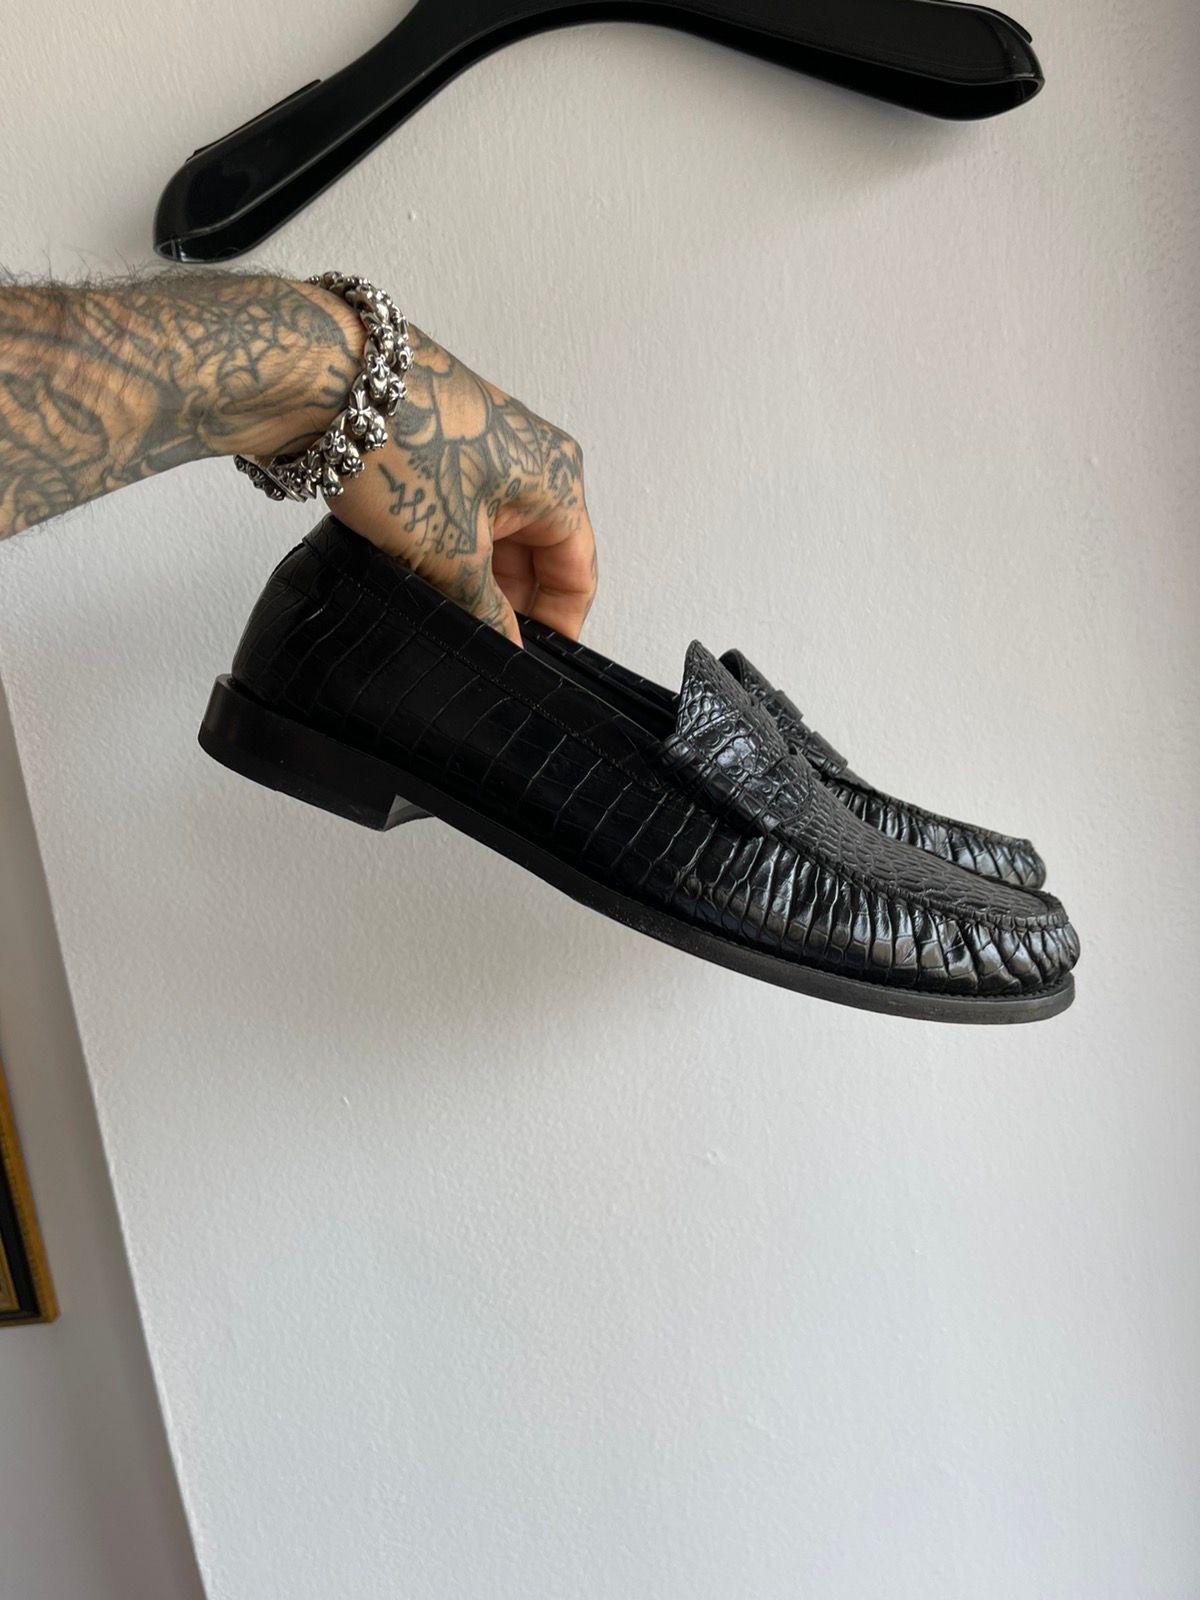 Celine SS20 Hedi Black Leather Croc Loafers Shoes EU43